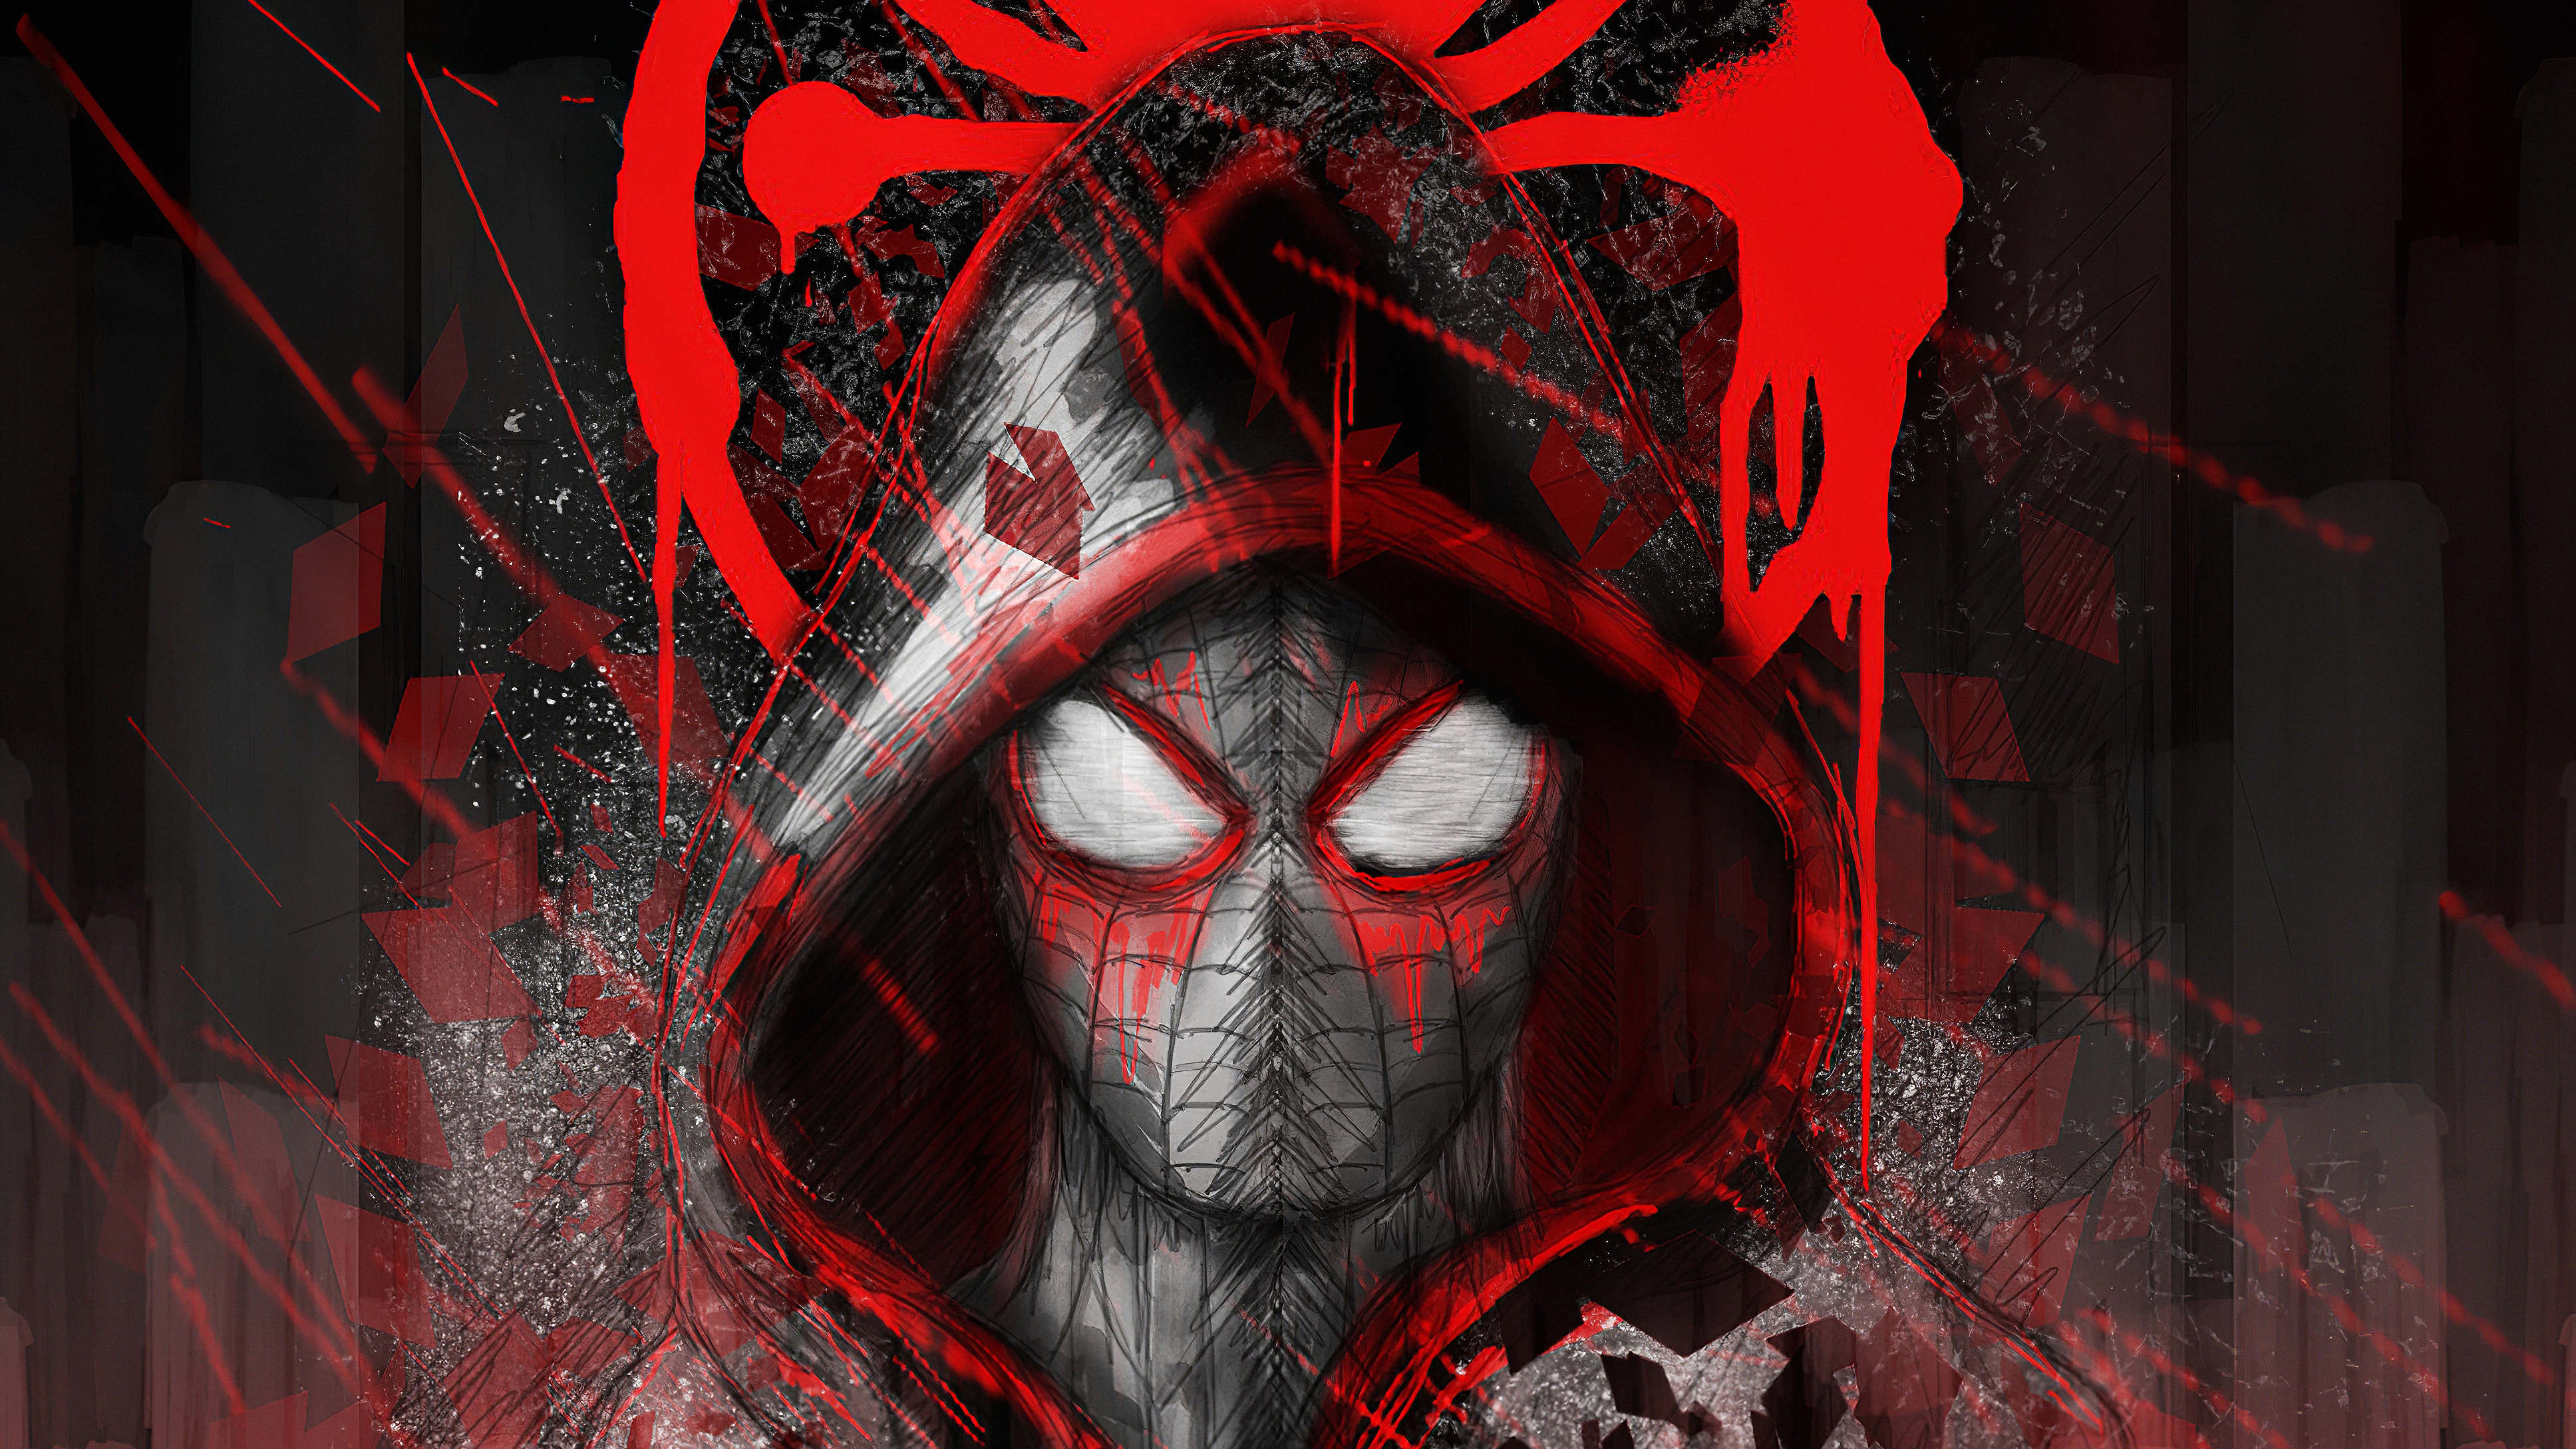 Spider Man Wallpaper Download 4K - Spider Man 4K Image | HD Wallpapers